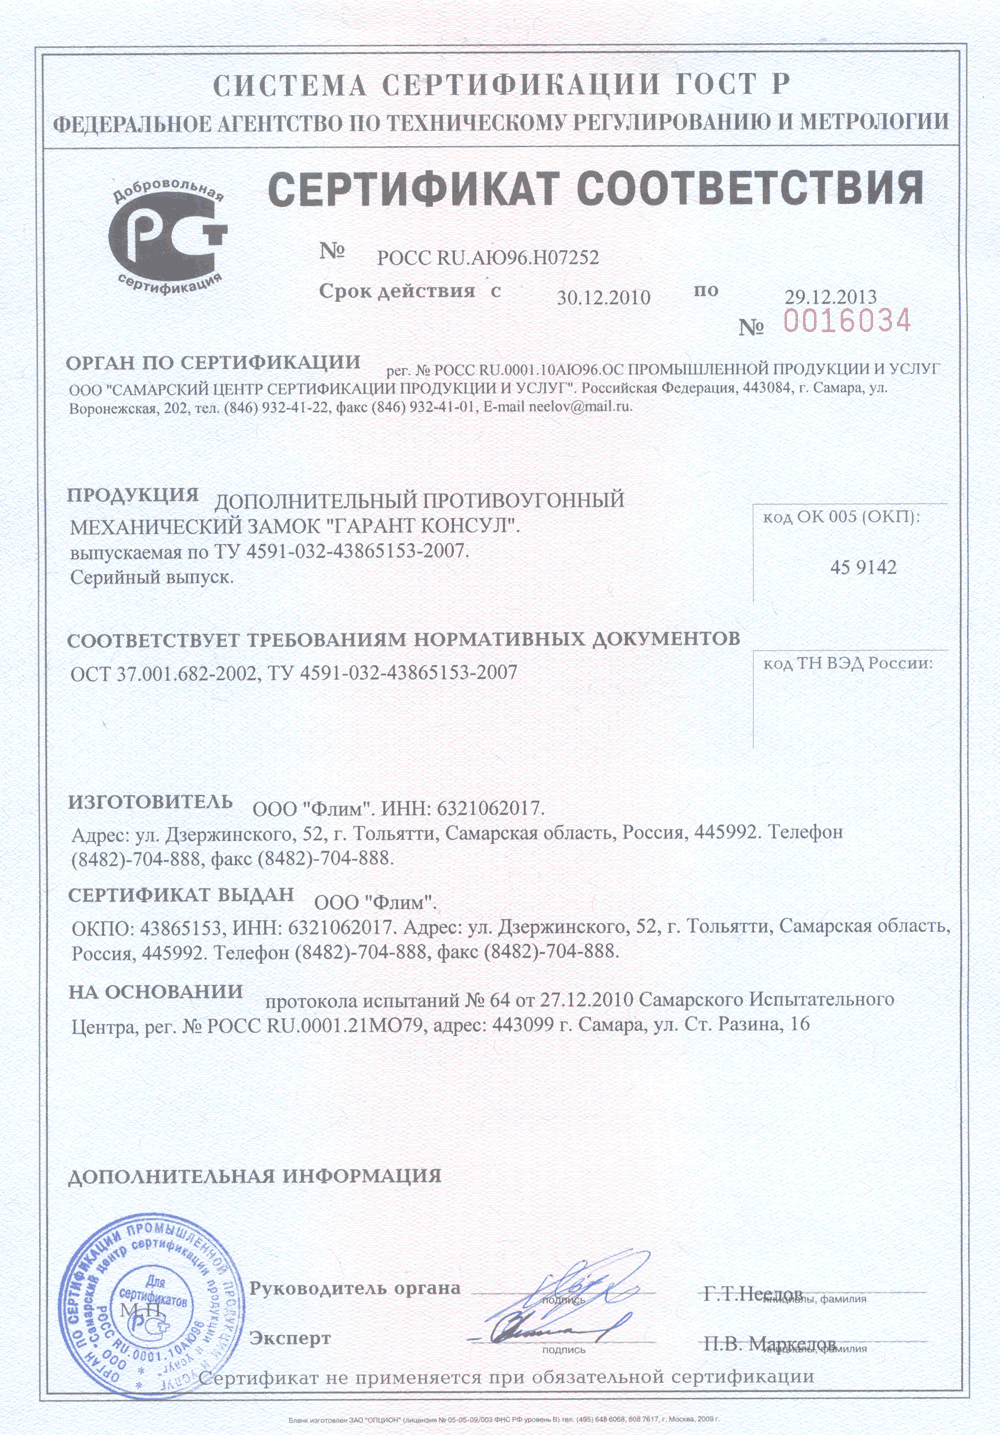 Сертификат соответствия на Гарант Консул №0016034